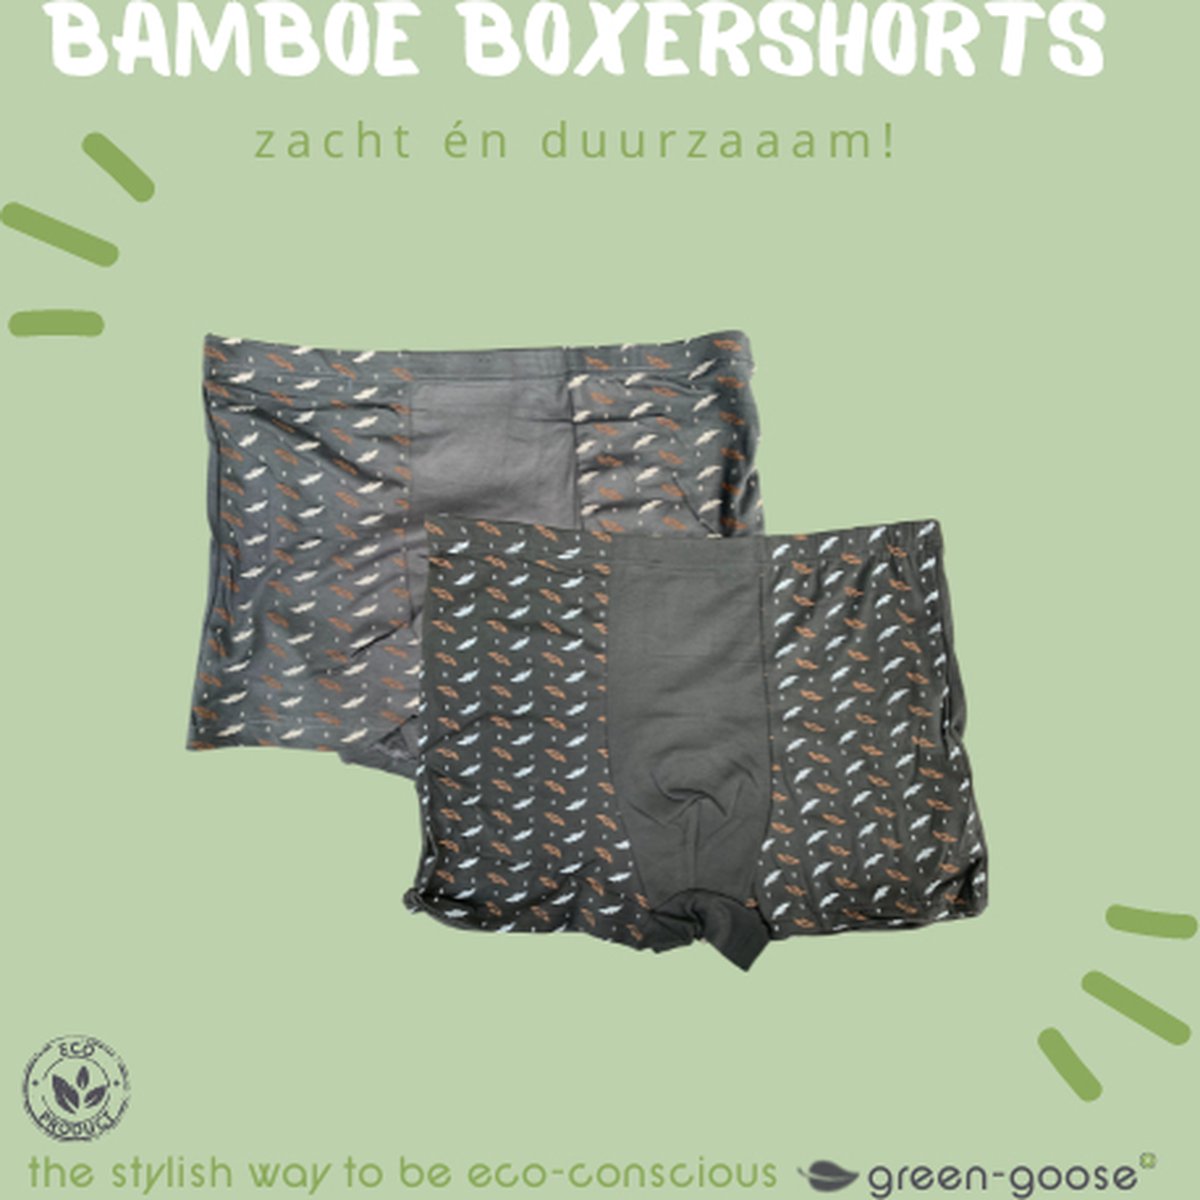 green-goose® Bamboe Boxershorts | 2 Stuks | Maat L | Bat | Duurzaam | Stretch | Ademend en Thermoregulerend